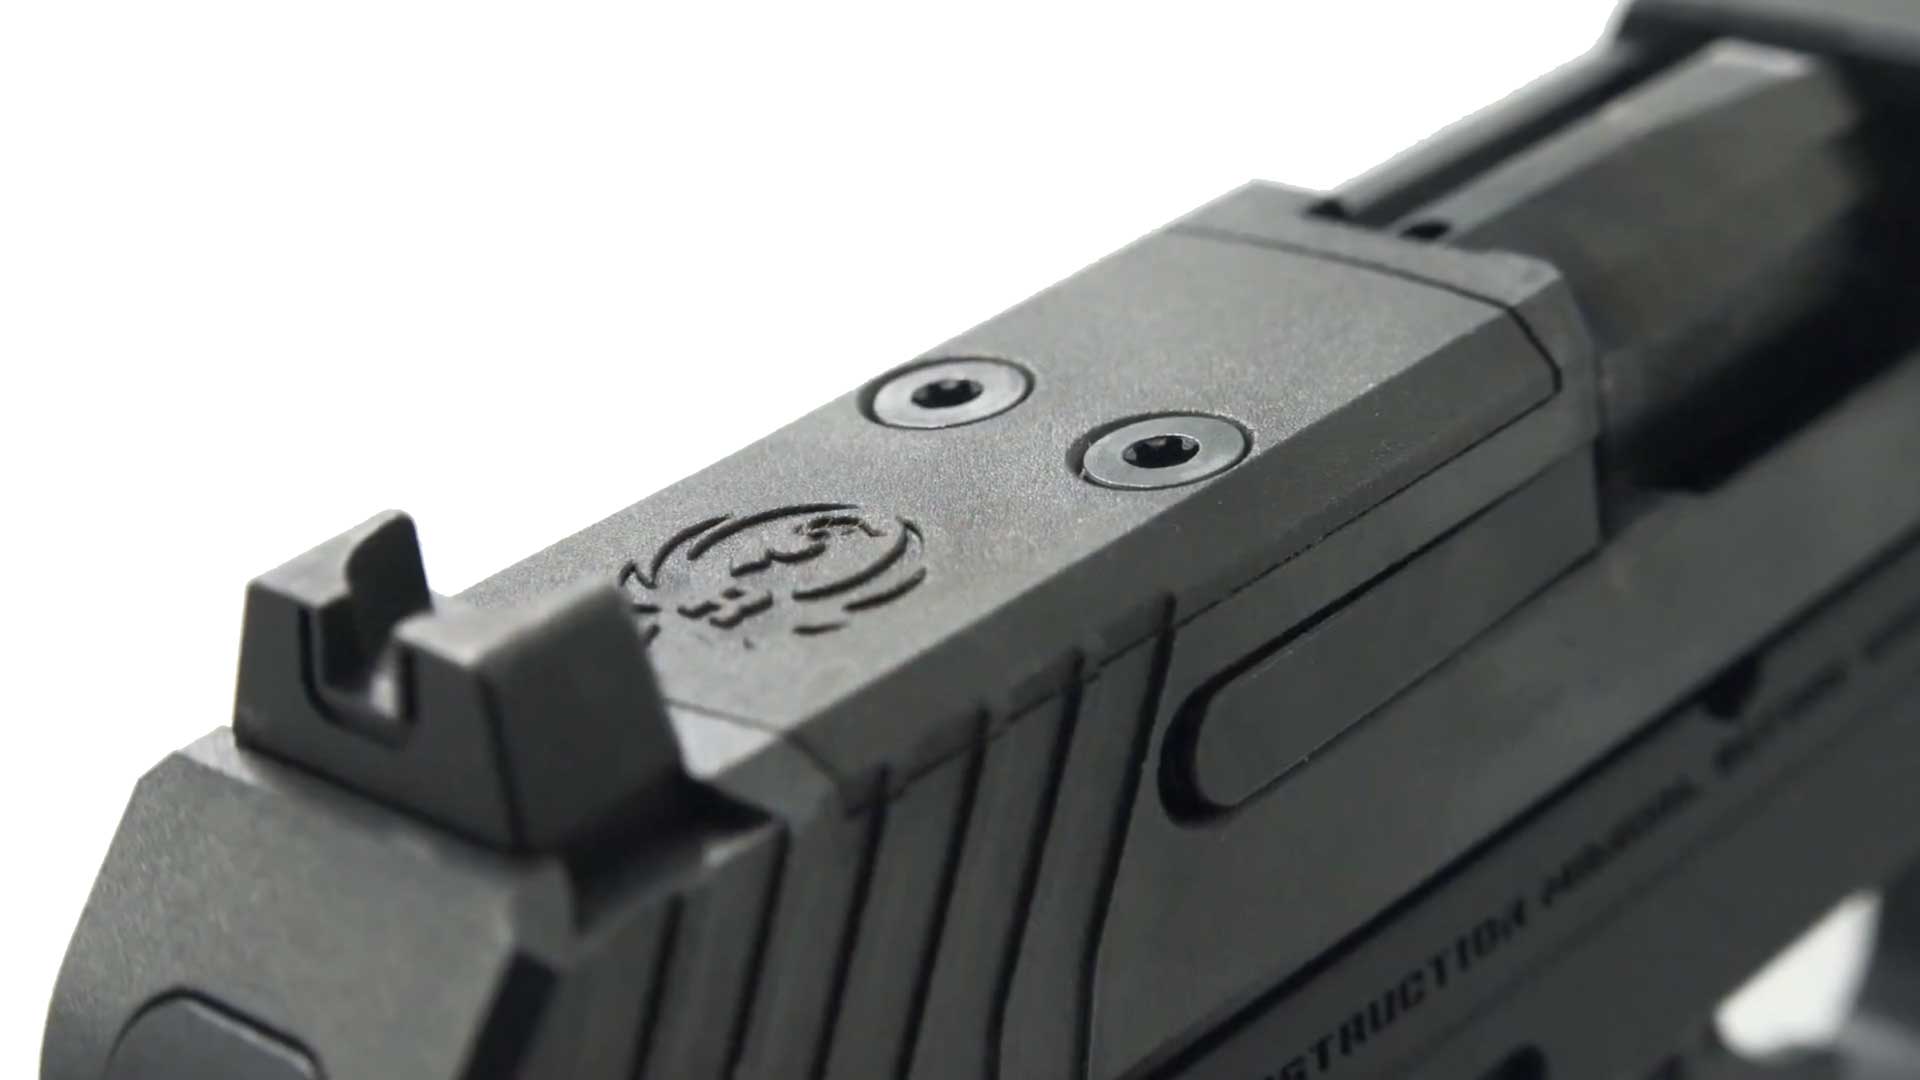 Pistol slide black metal sights serrations lines screws logo